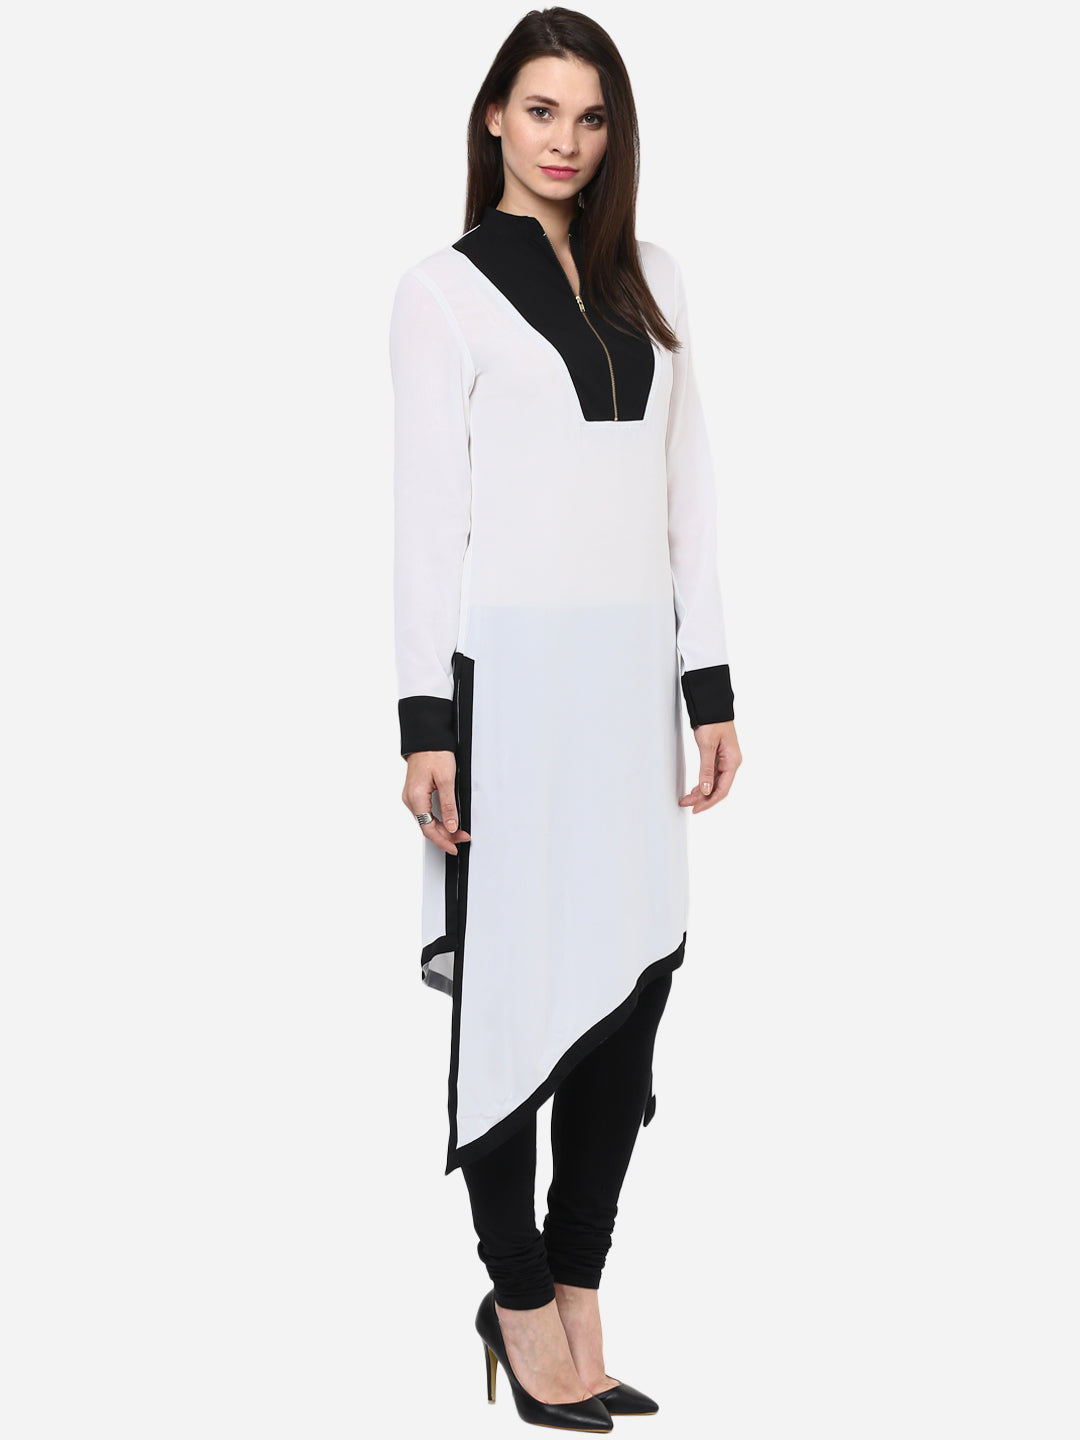 Black and White Stripes Crepe Kurti - Kurtis Online in India | Kurti designs  latest, Women dress sale, Muslim fashion outfits